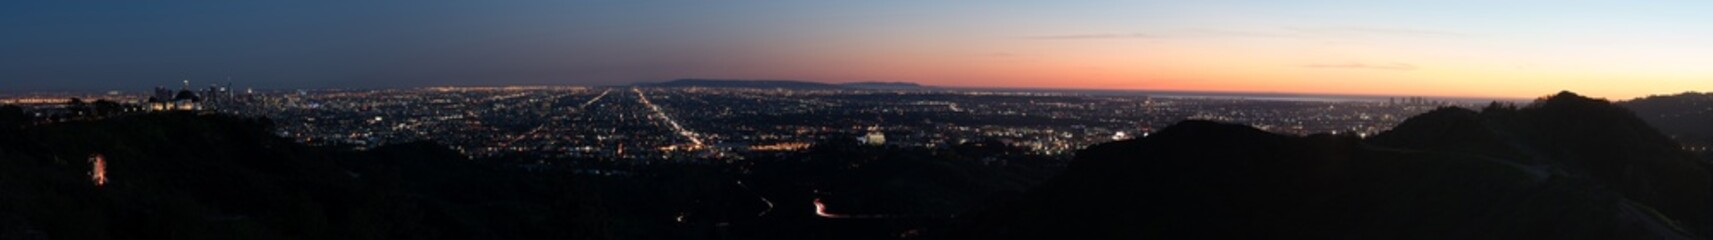 Fototapeta na wymiar Panoramic landscape of Los Angeles city lights at night